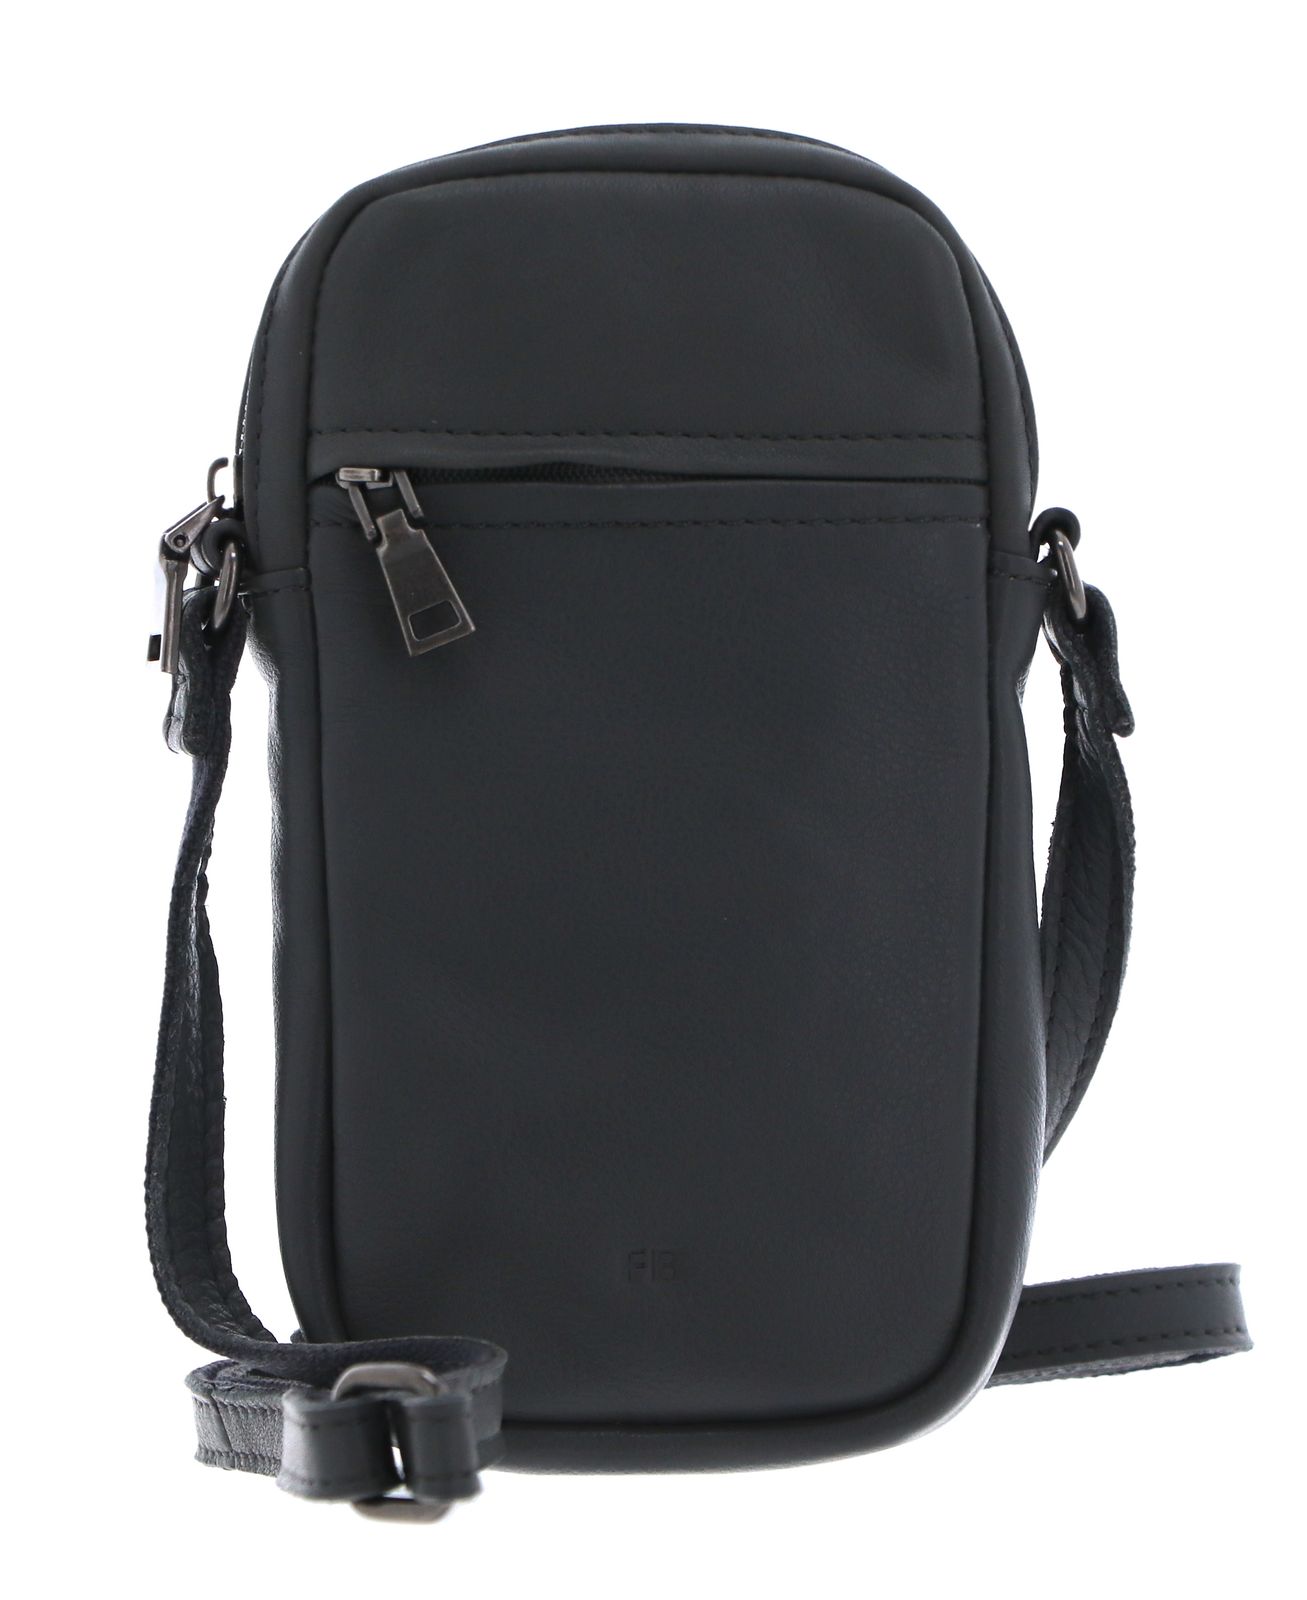 FREDsBRUDER Mobile Bag Dark Grey | Buy bags, purses & accessories ...